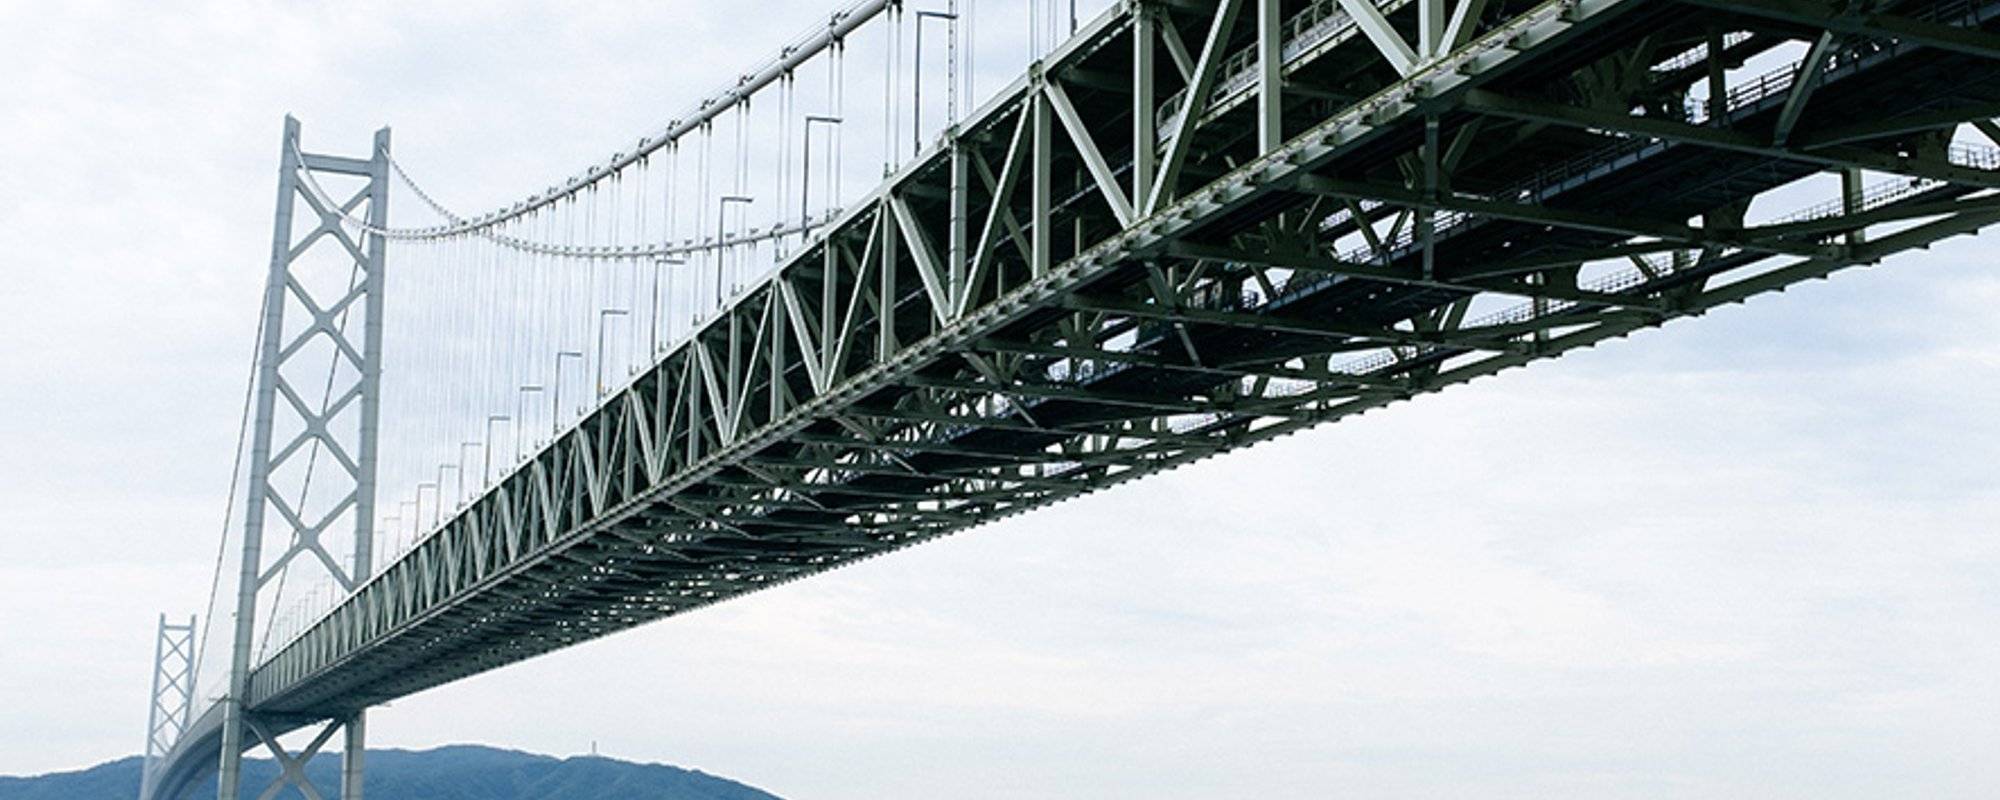 Exploring Japan - Akashi Kaikyō Suspension Bridge